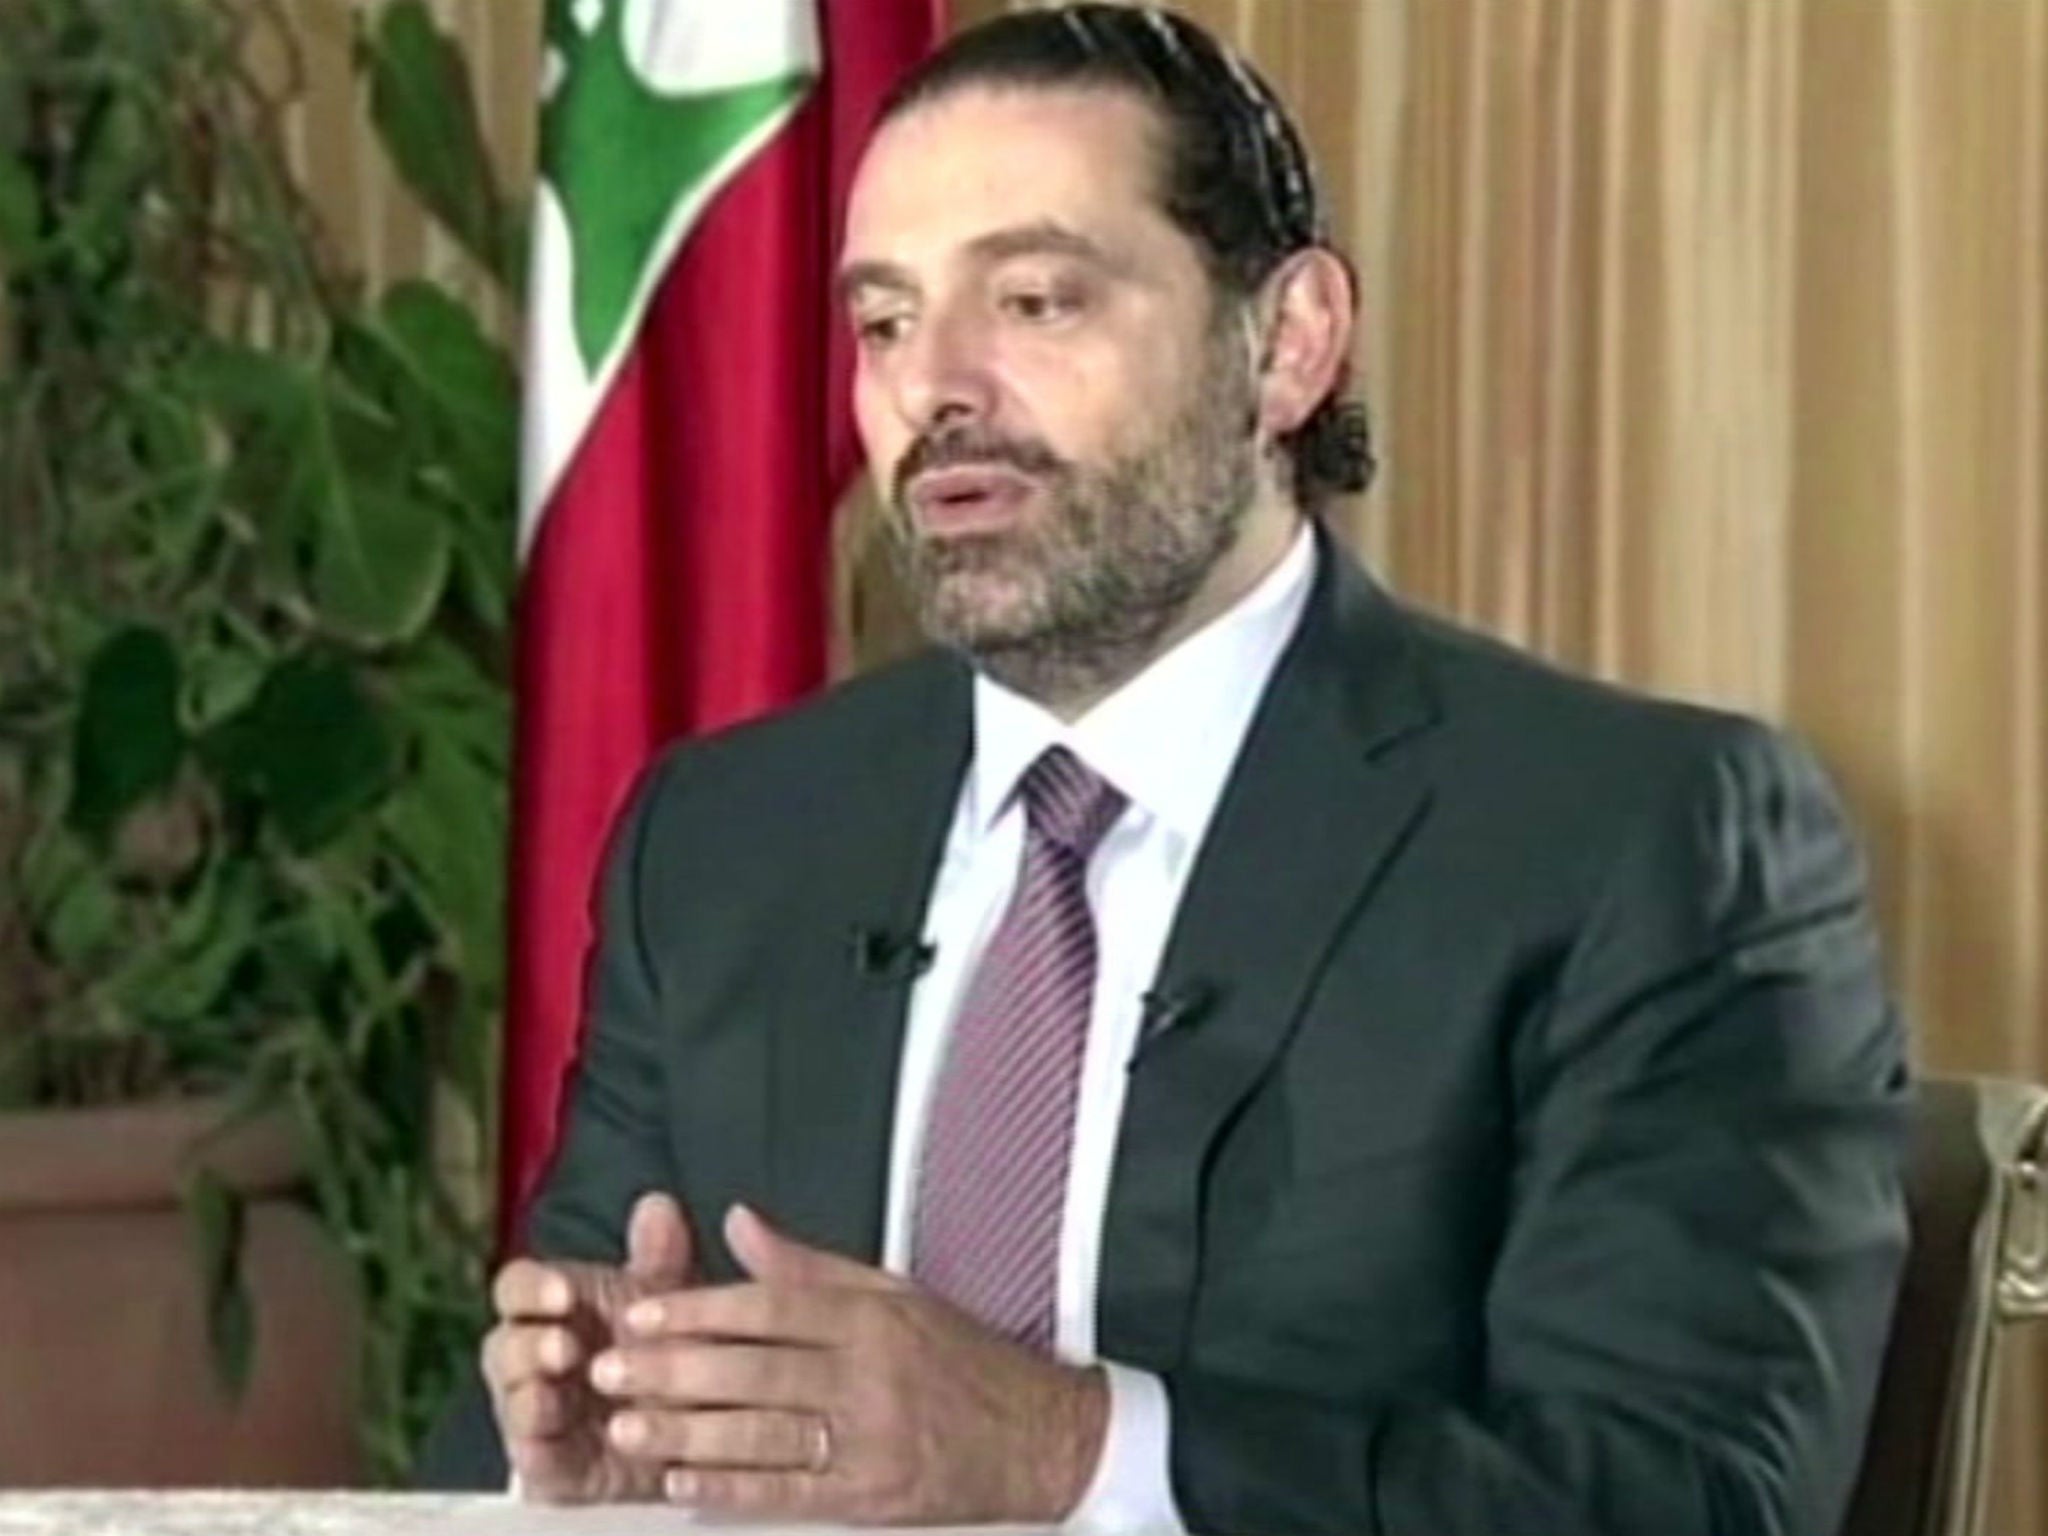 Lebanon’s Prime Minister Saad Hariri gives a live TV interview in Riyadh, Saudi Arabia